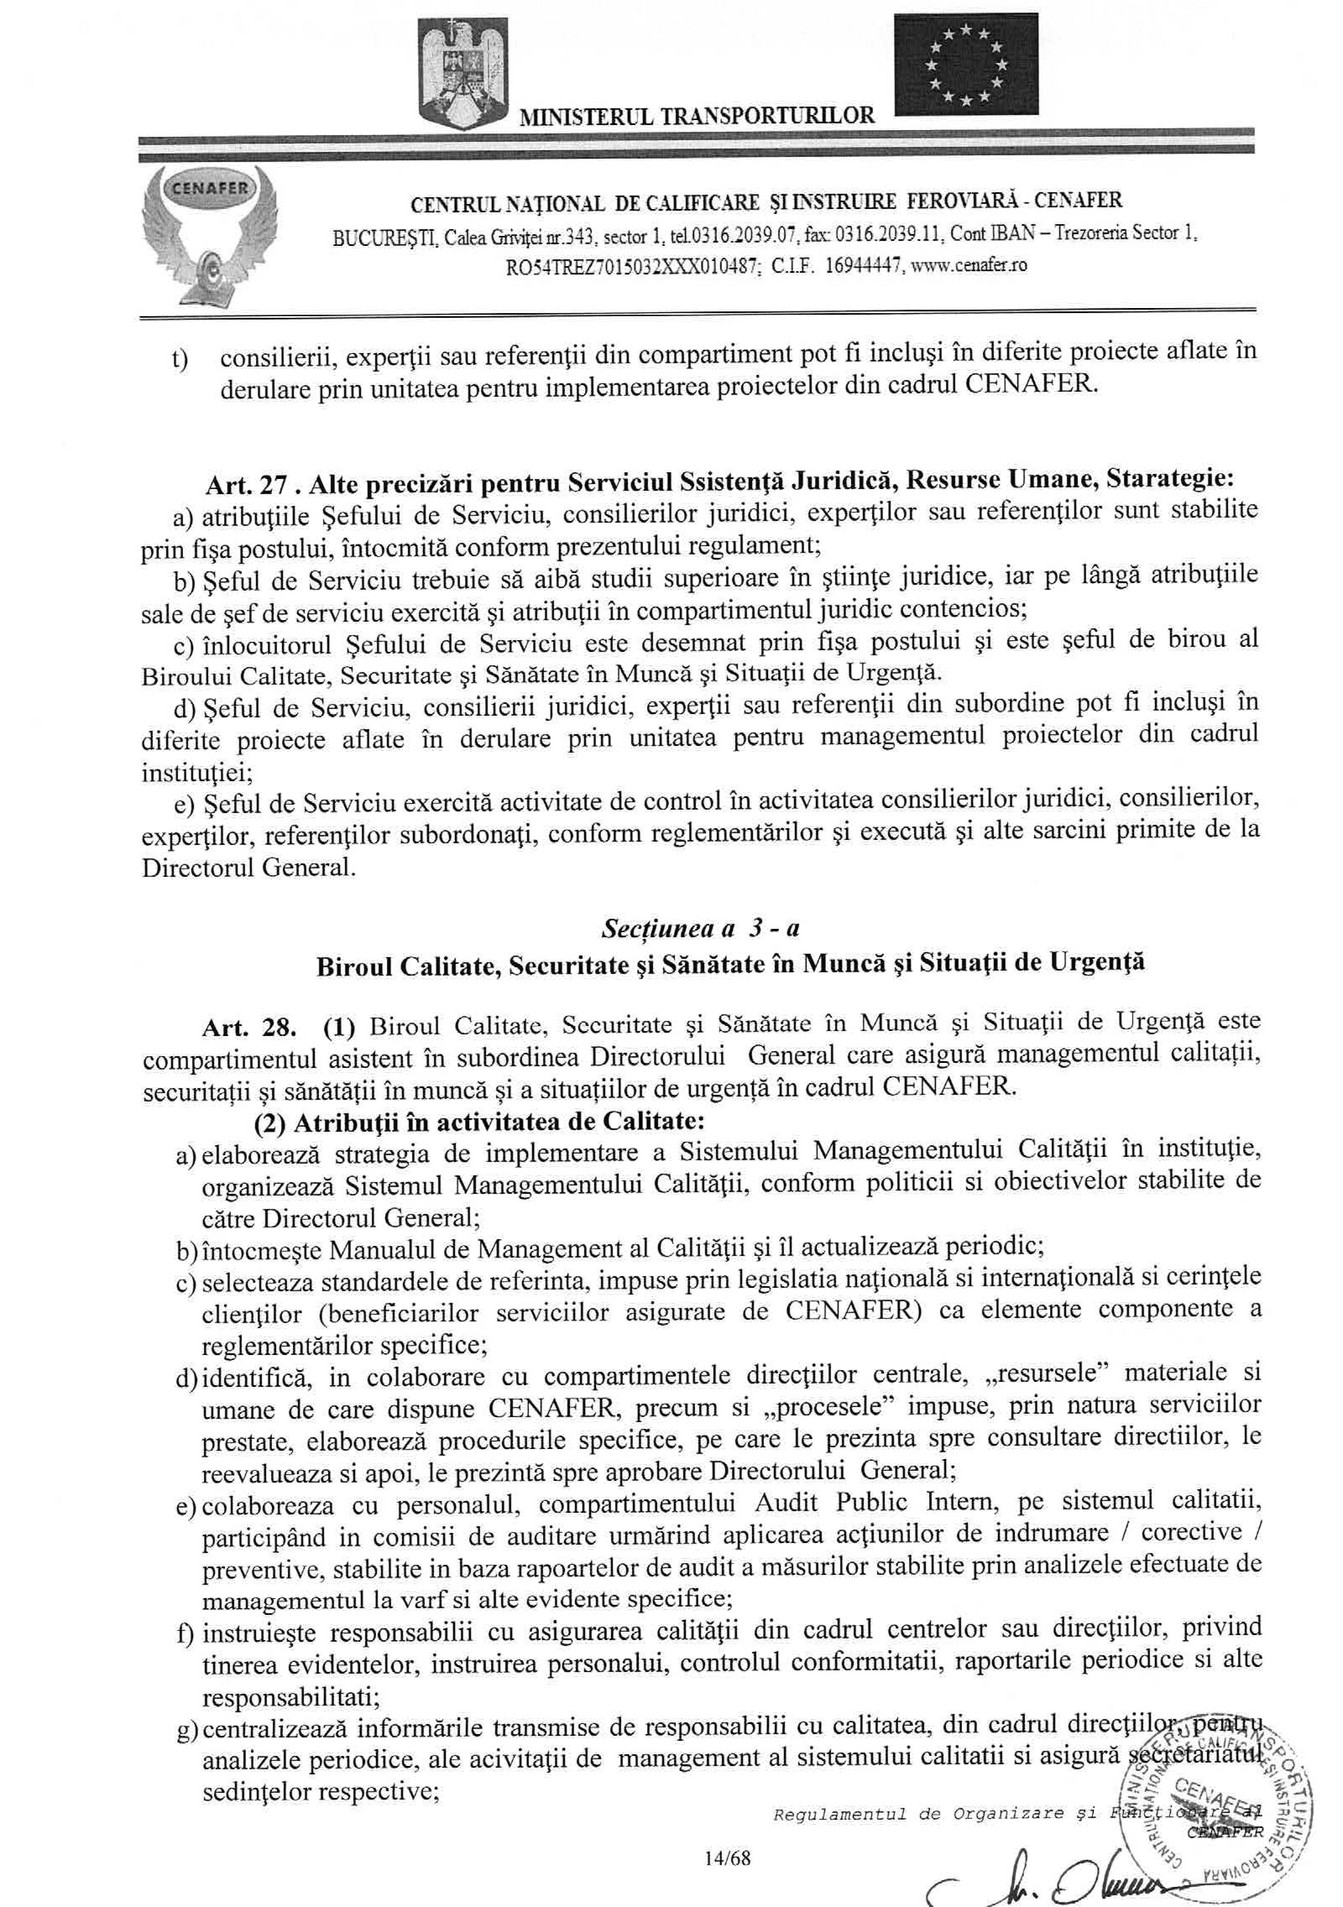 win spell recipe My publications - regulamentul-de-organizare-si-functionare - Page 1 -  Created with Publitas.com